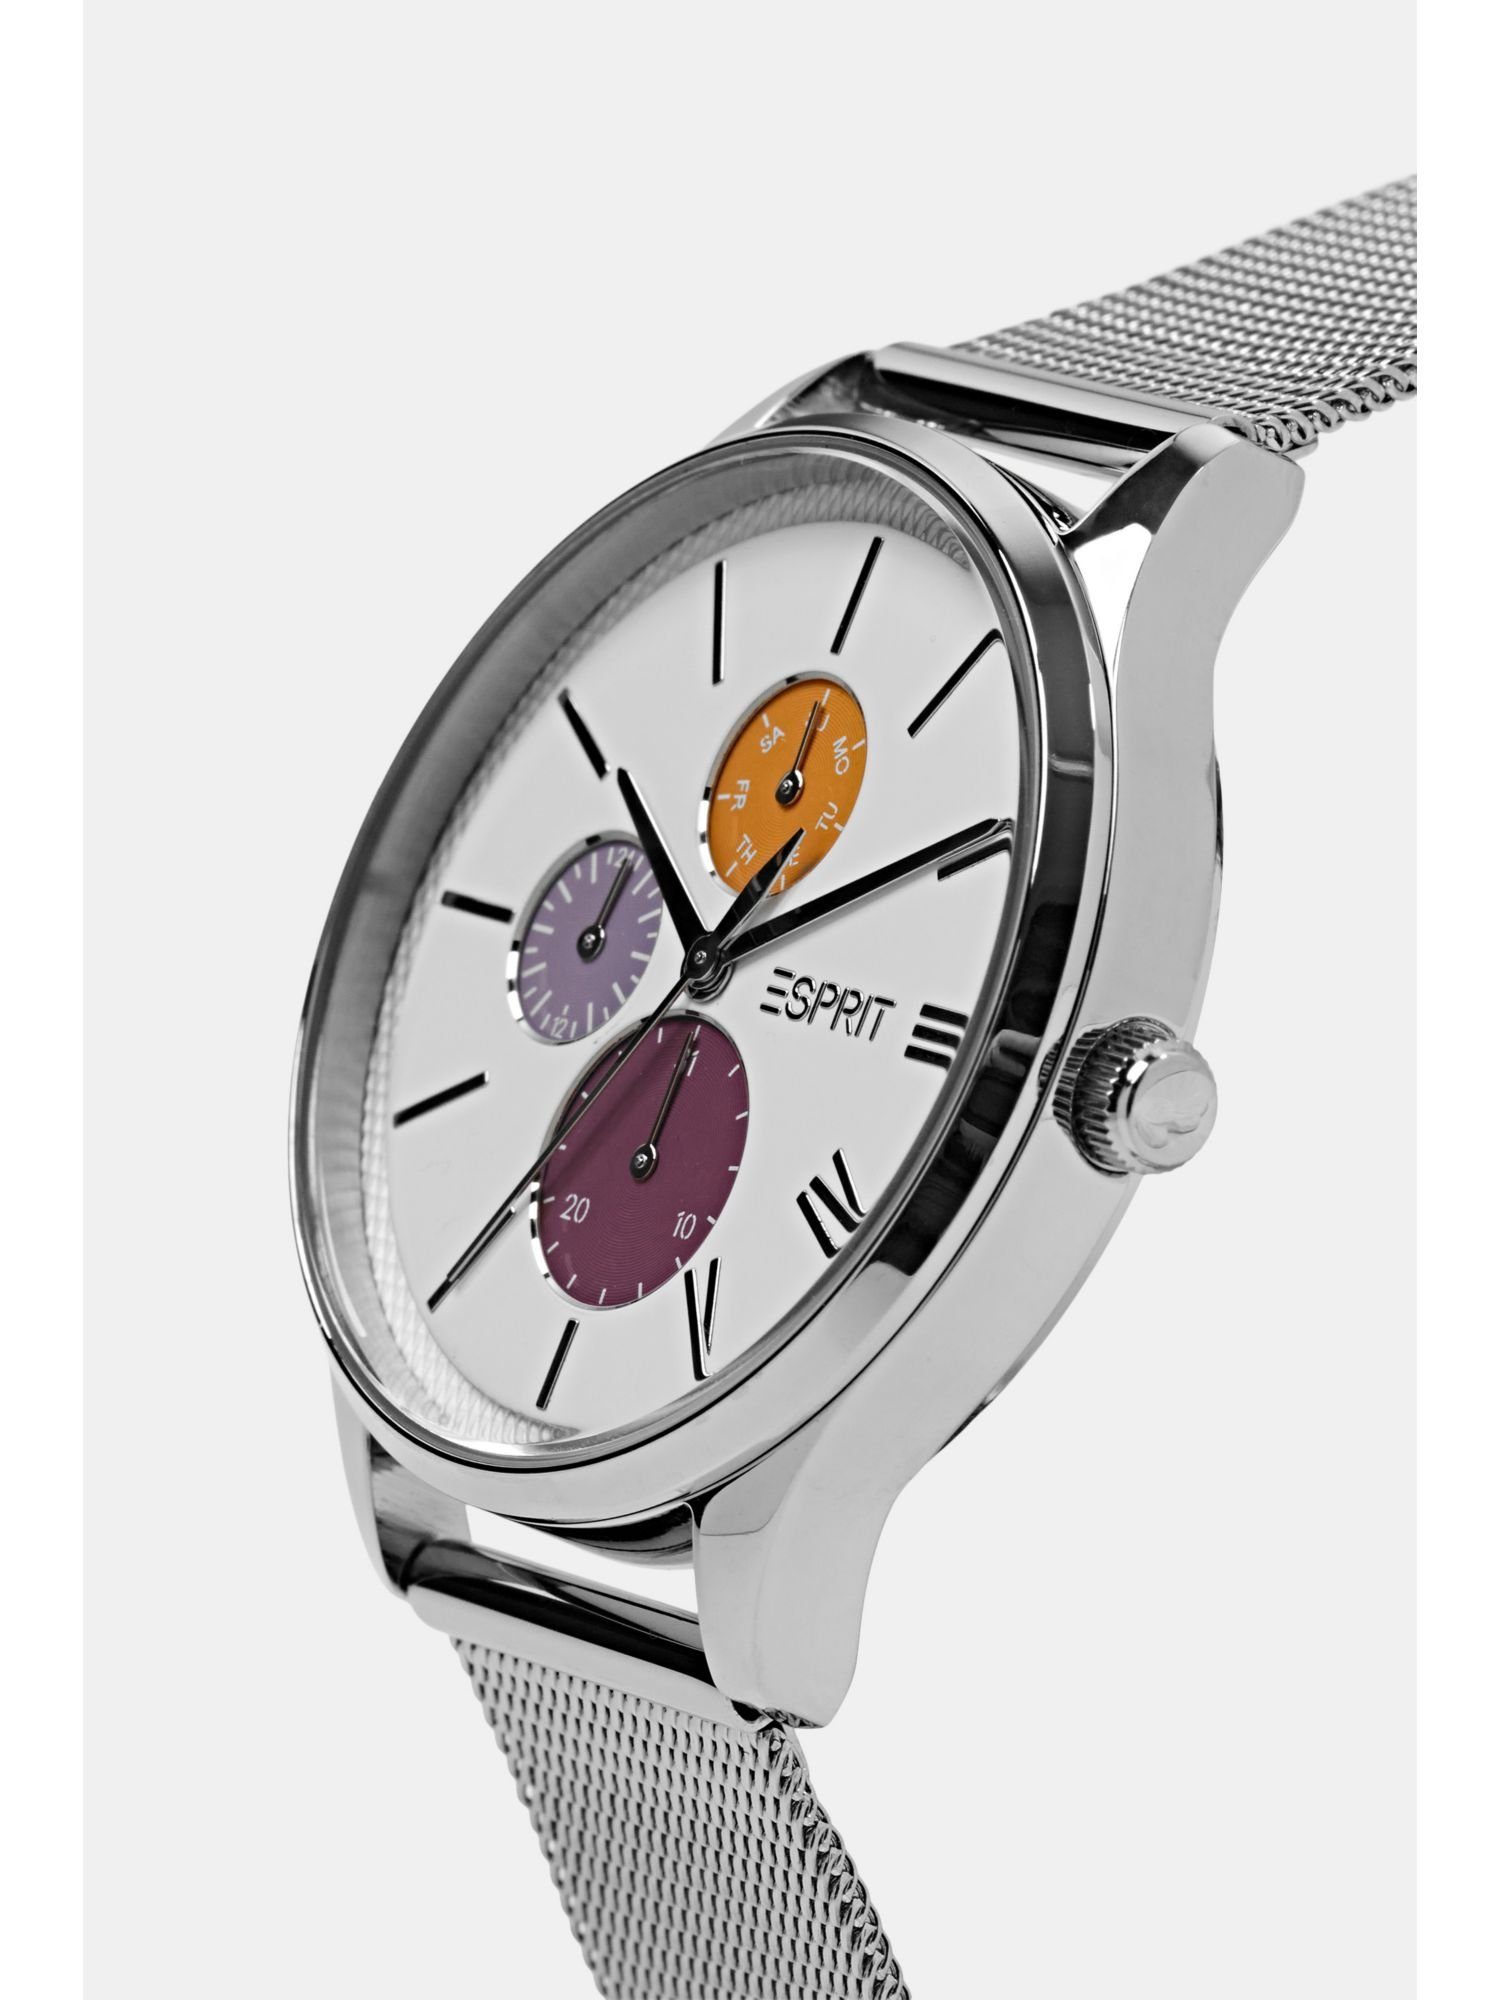 Mesh-Armband Uhr Esprit mit Multifunktionale Chronograph